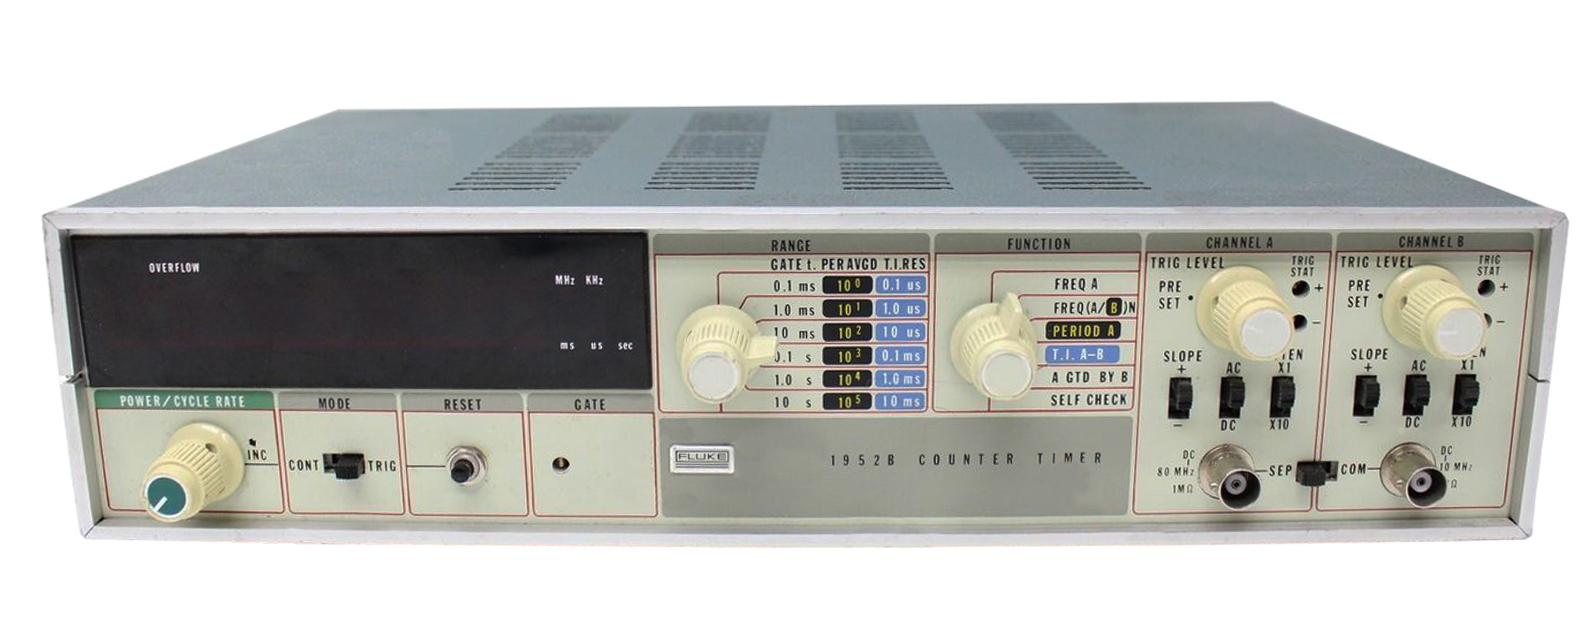 1952b - compteur de frequence - fluke - 5 hz - 80 mhz - mesures de fréquence_0